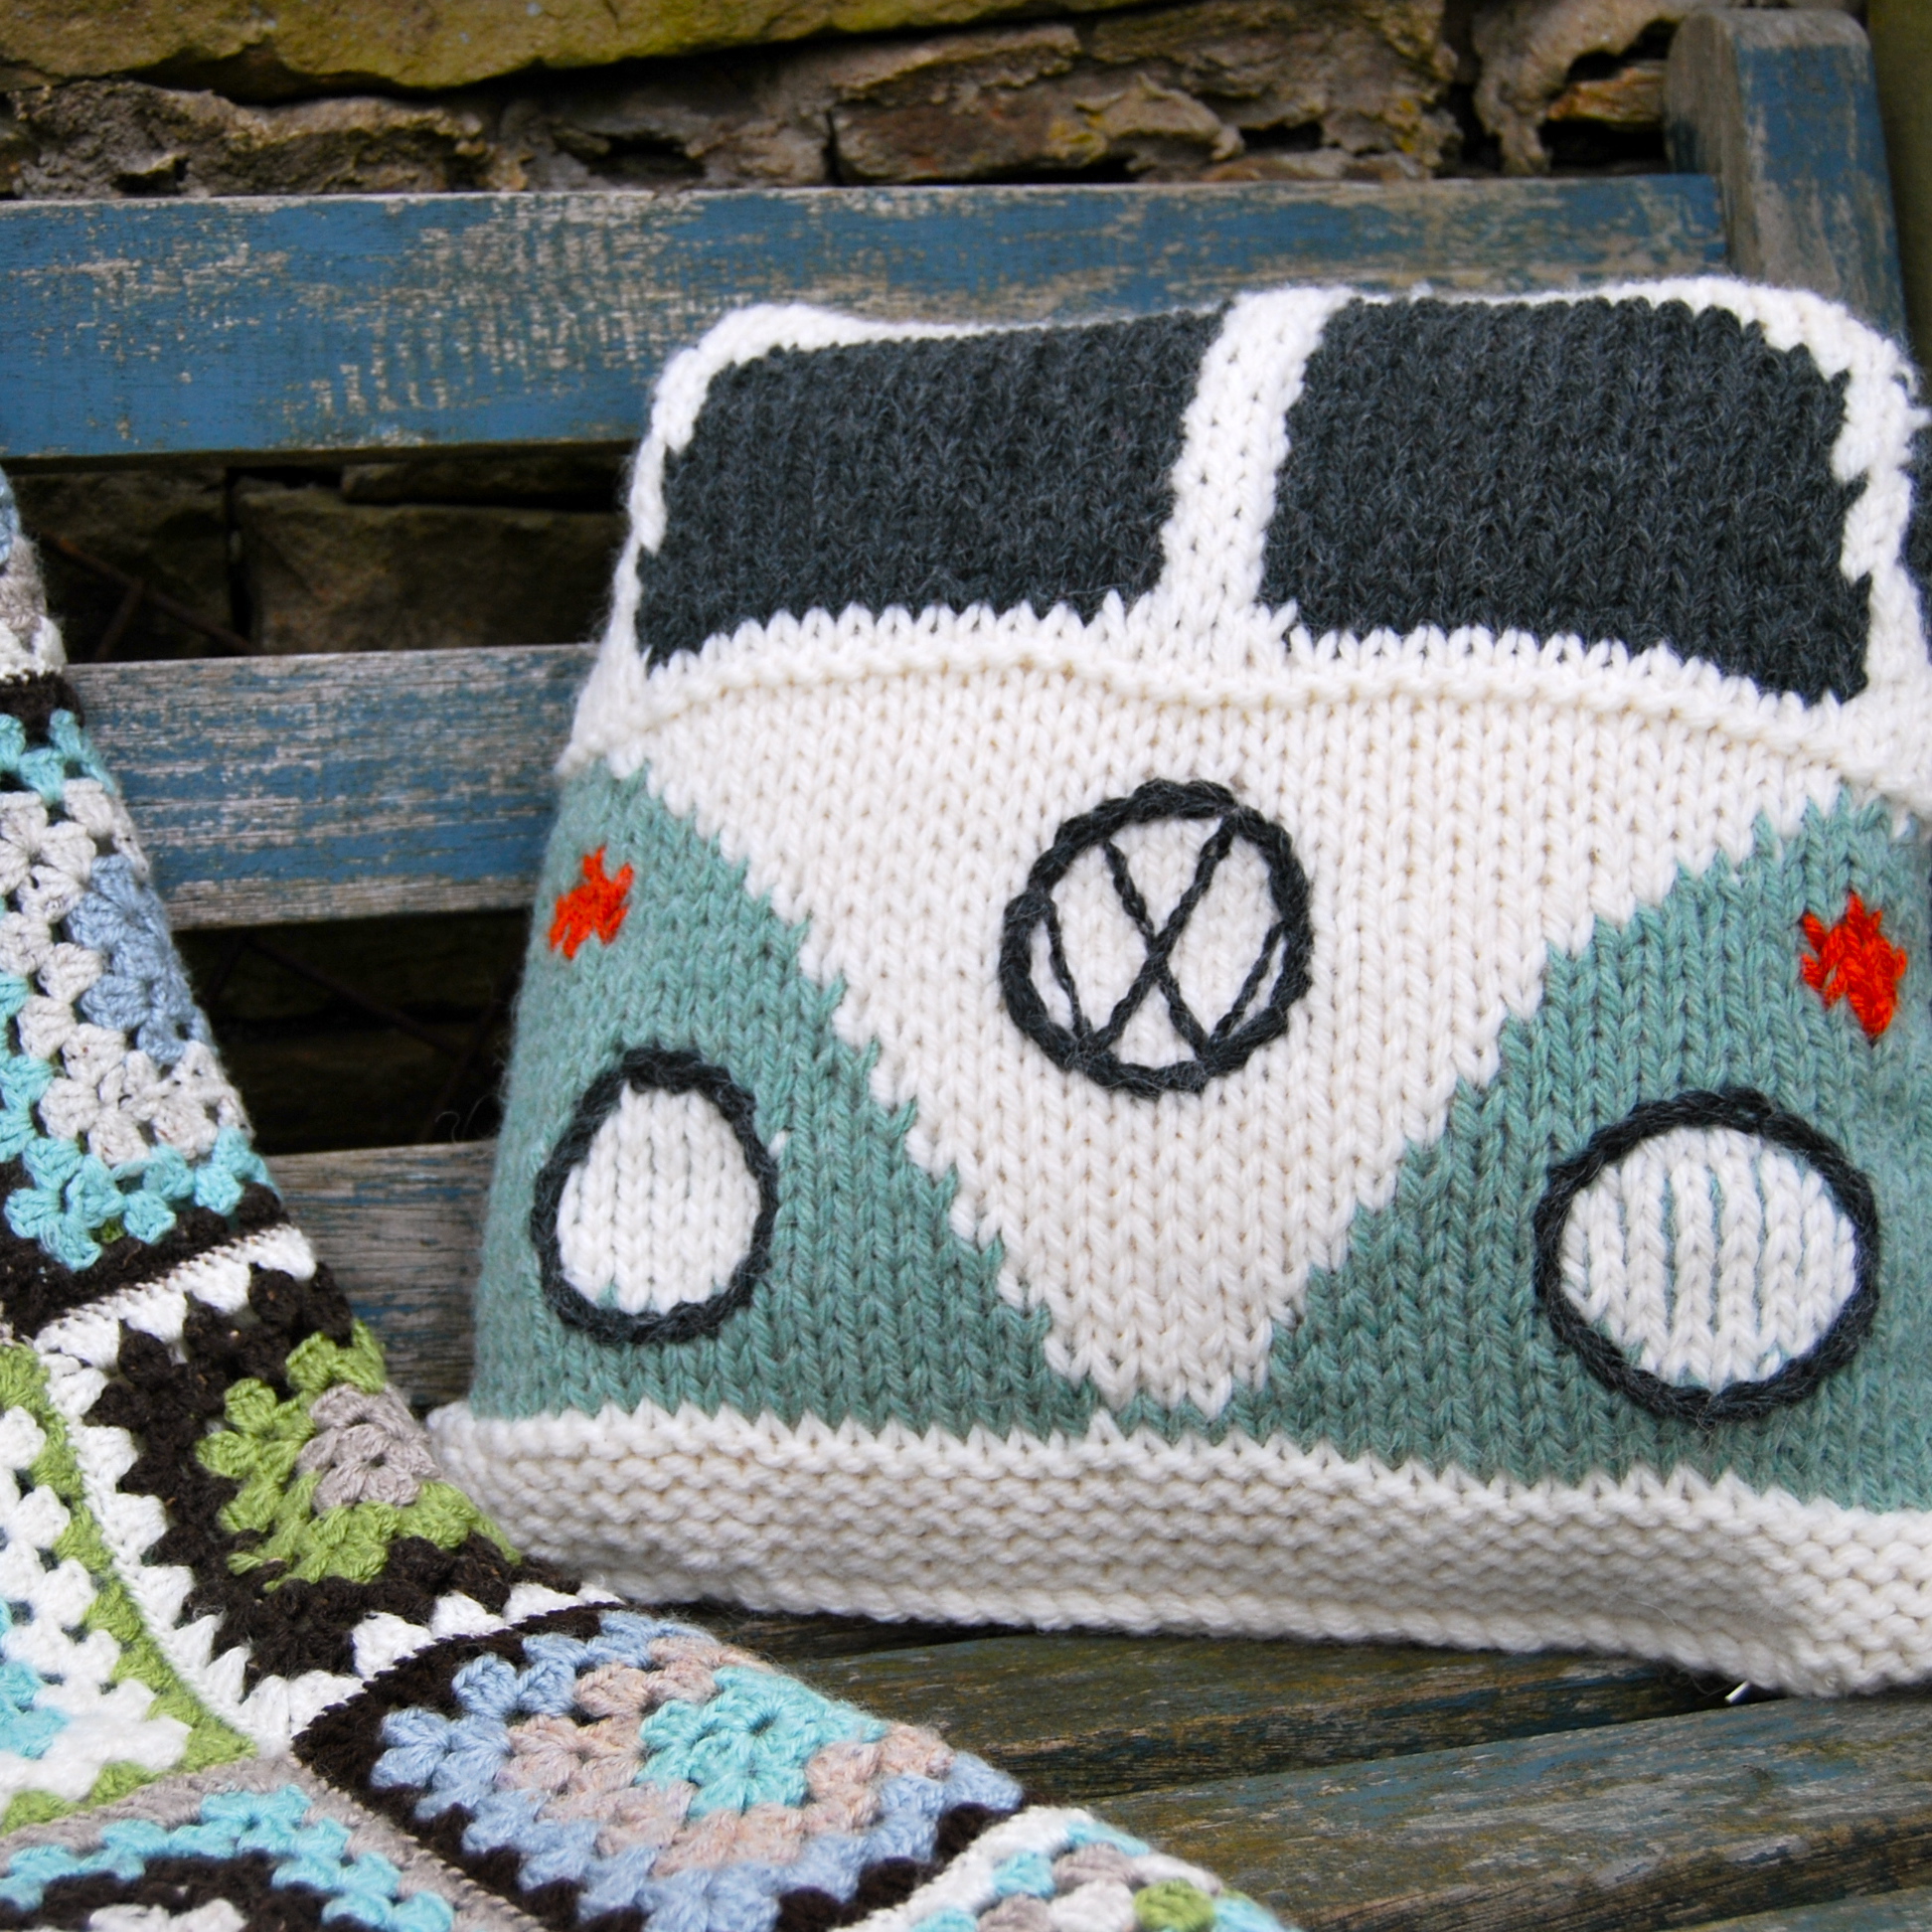 splitty campervan cushion knitting pattern